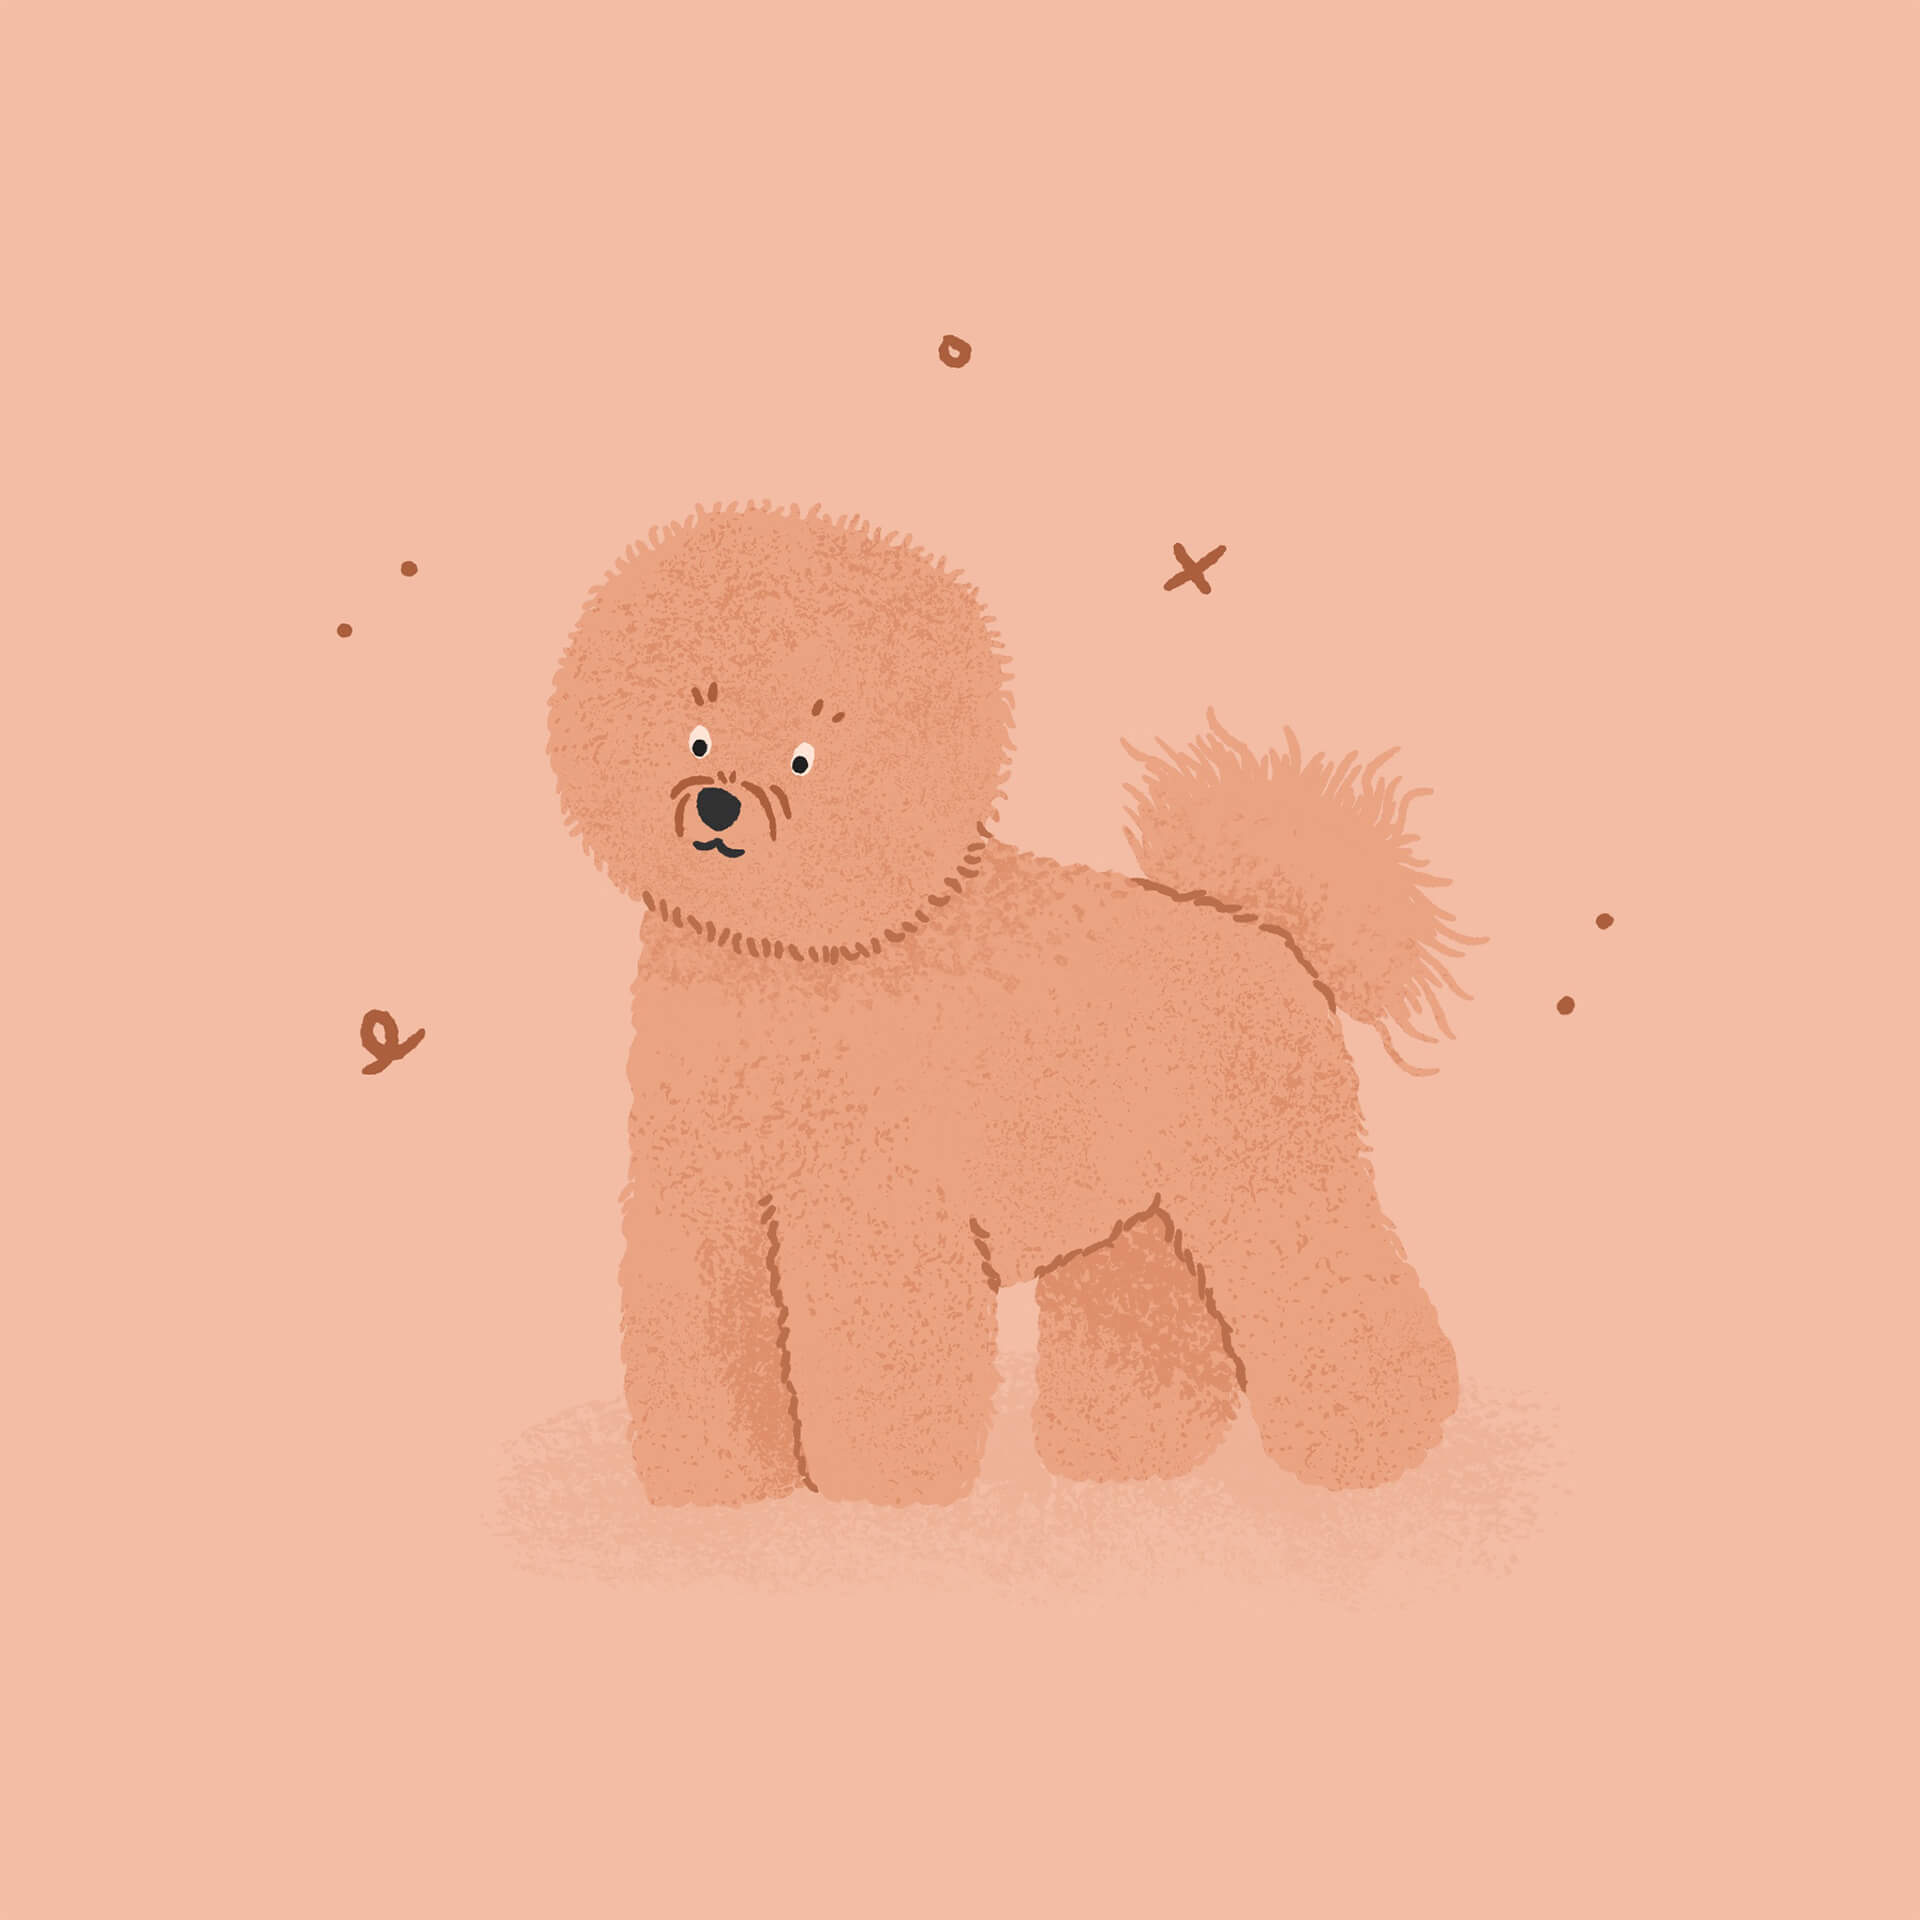 An illustration of a pink bichon frise dog